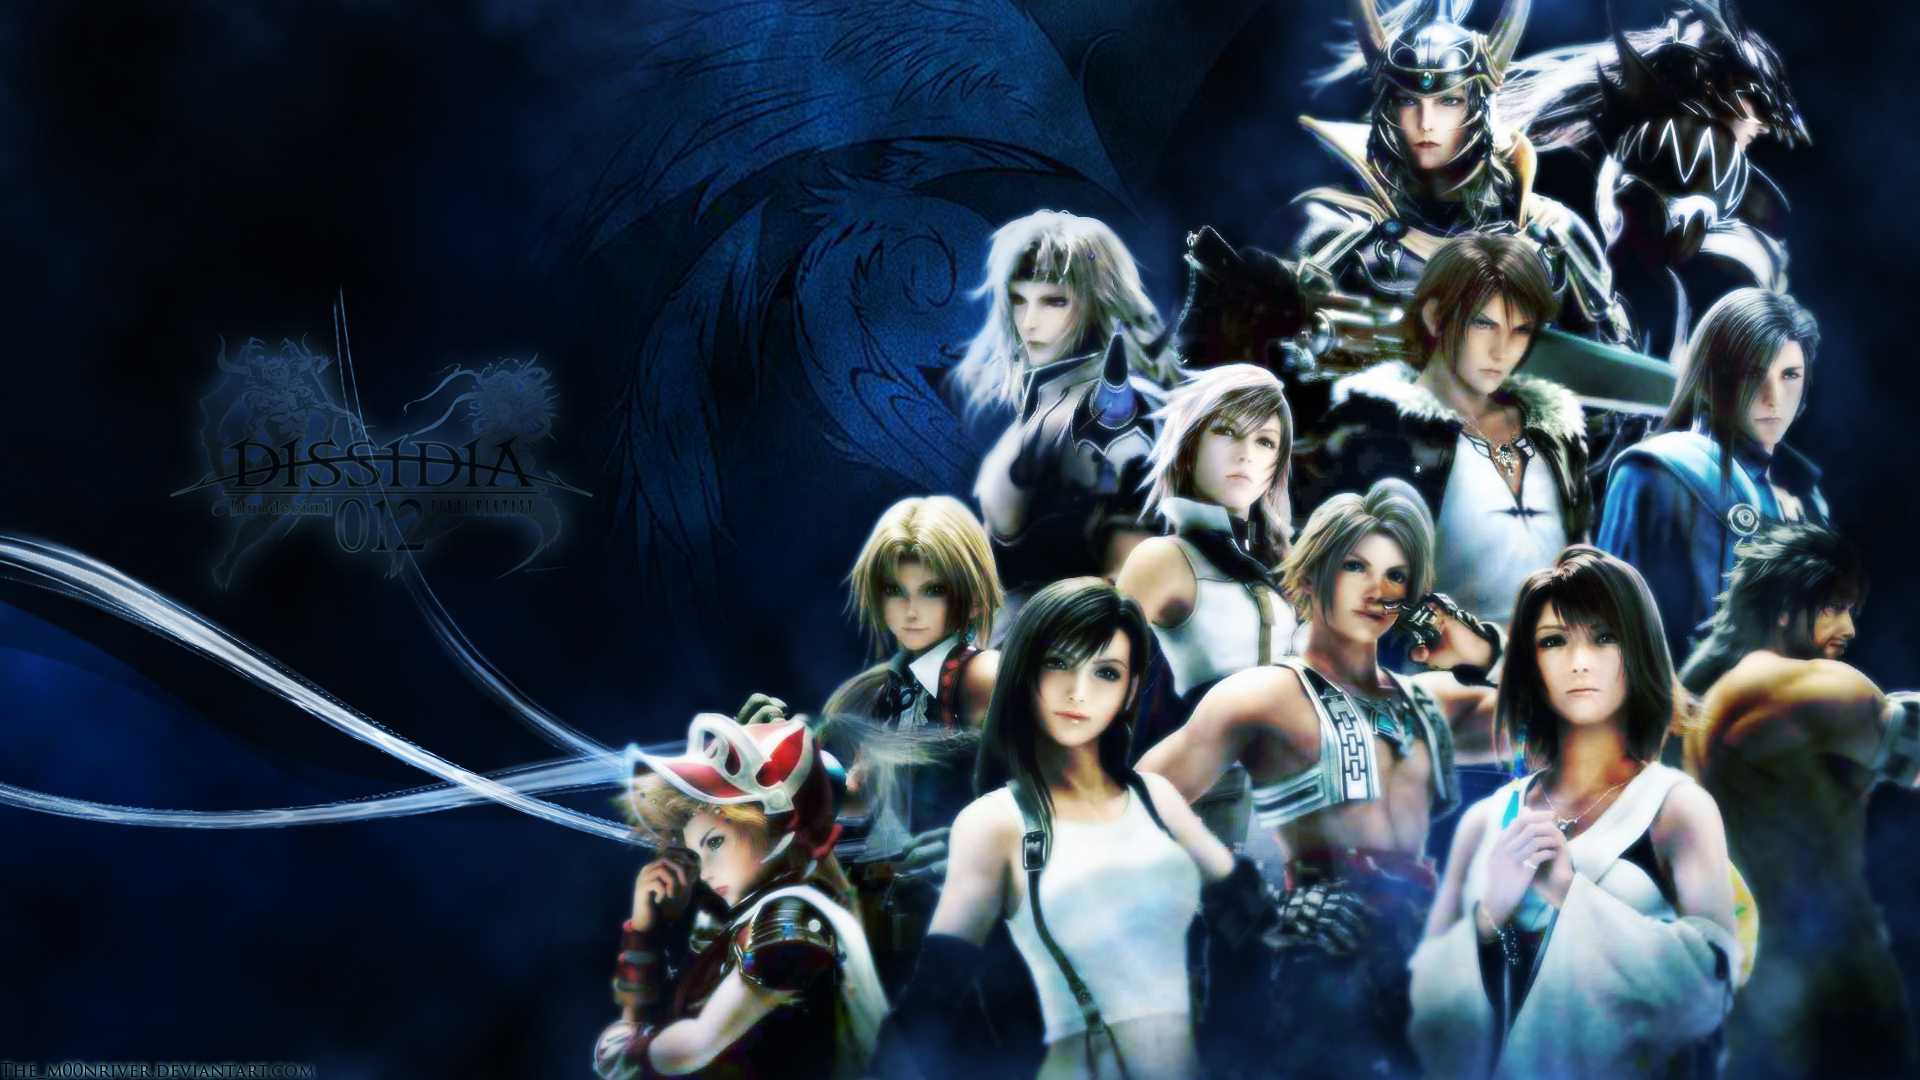 Final Fantasy I Anime Image Board